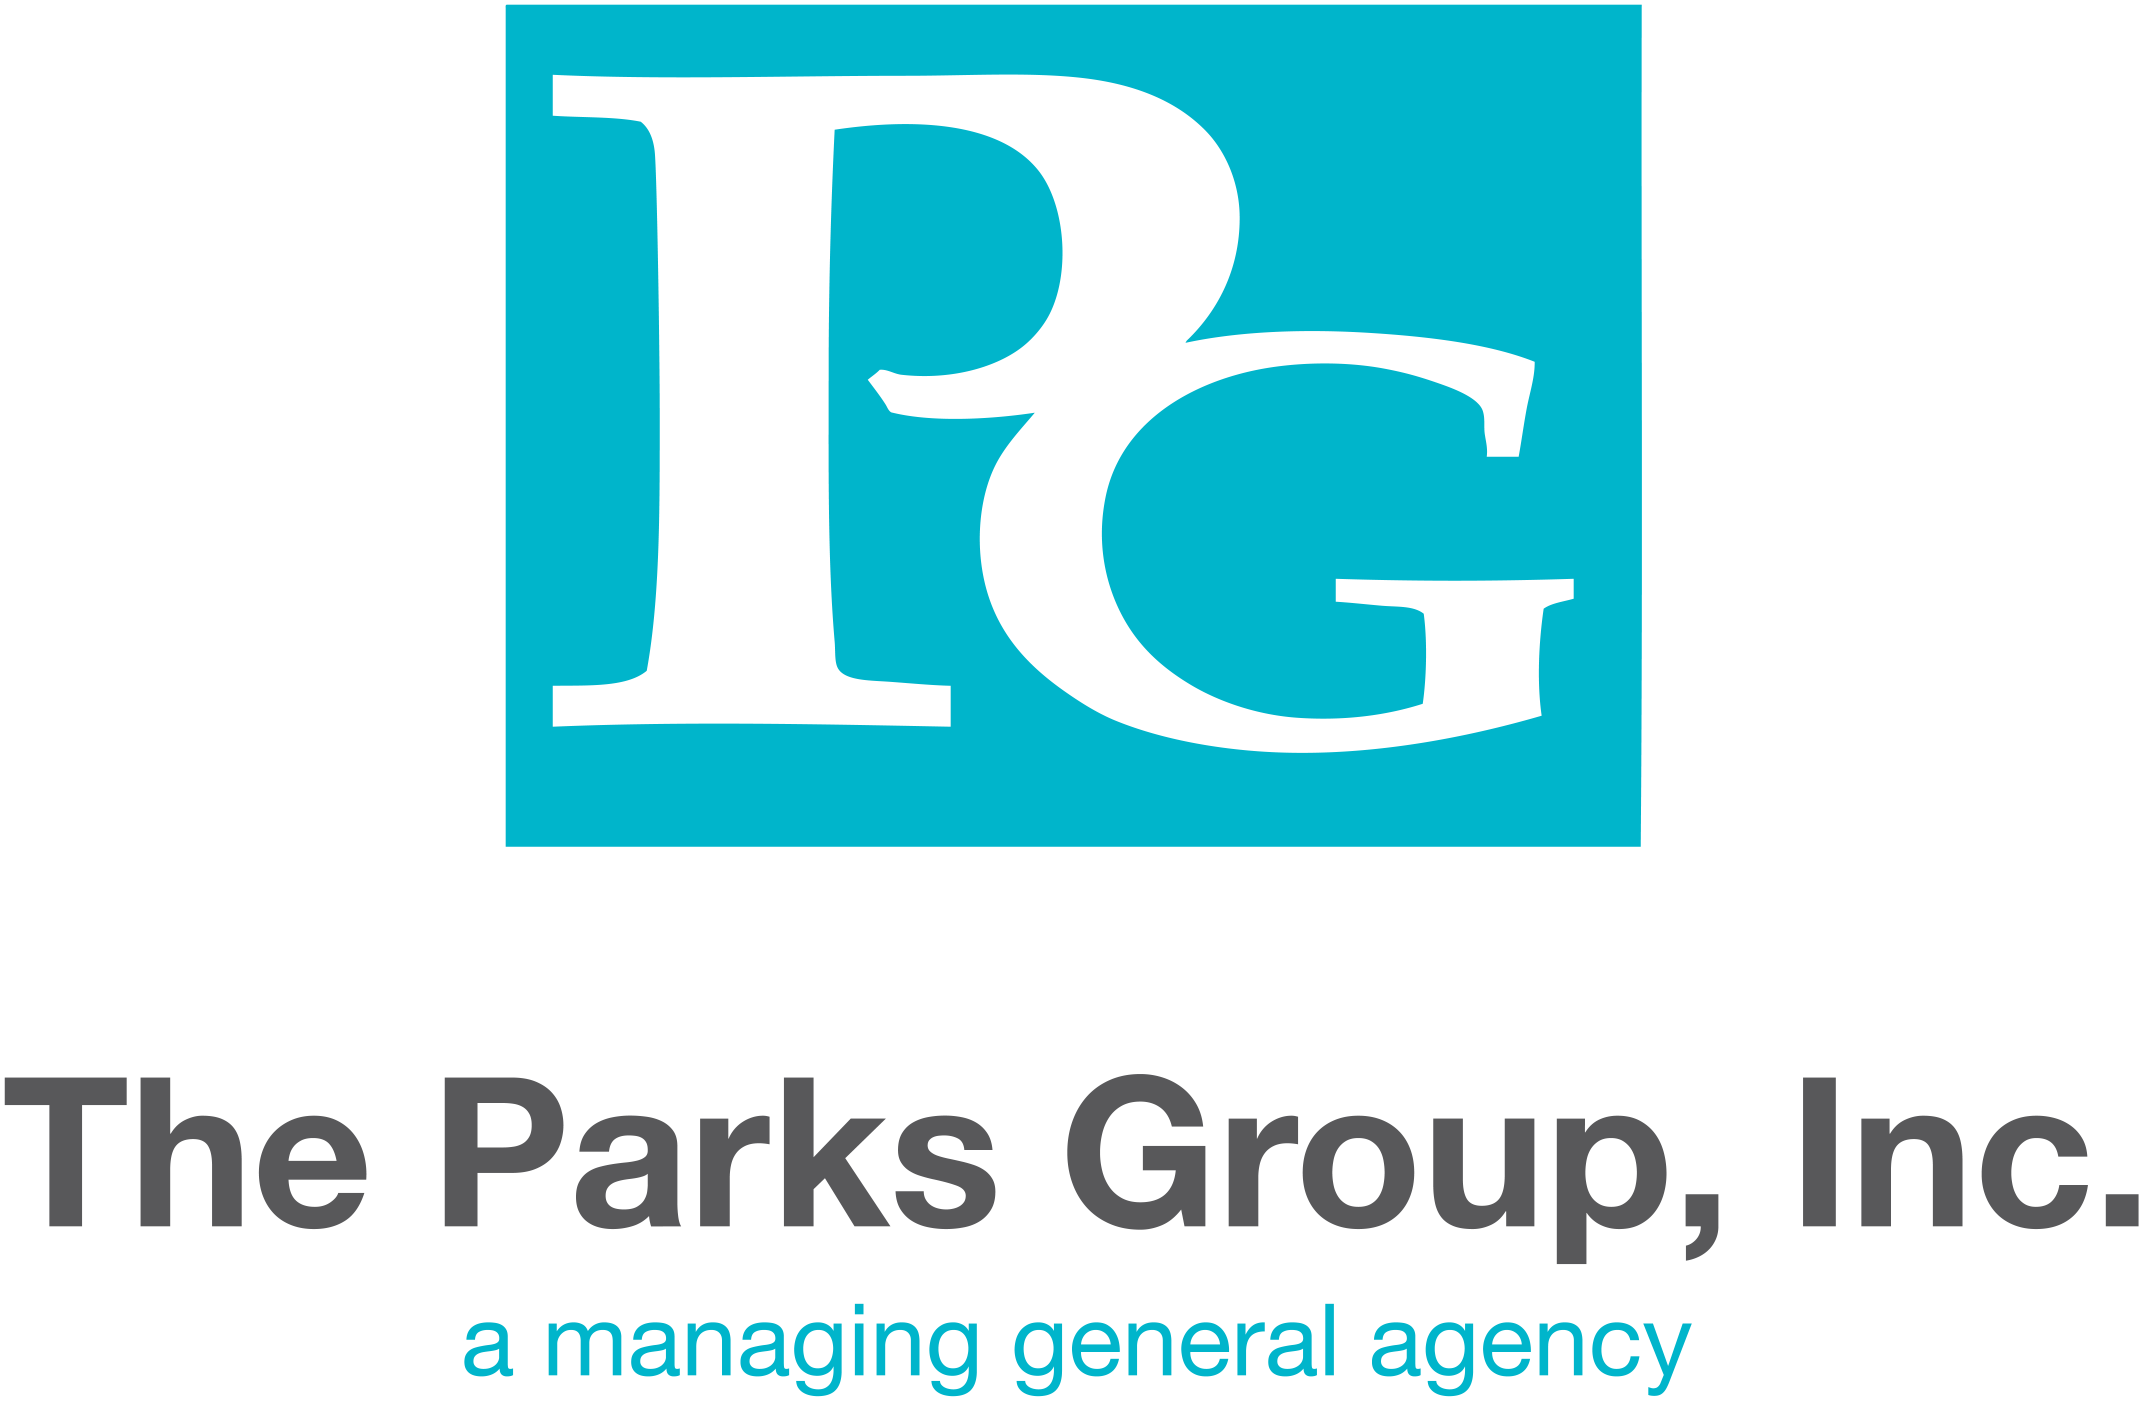 The Parks Group, Inc. logo